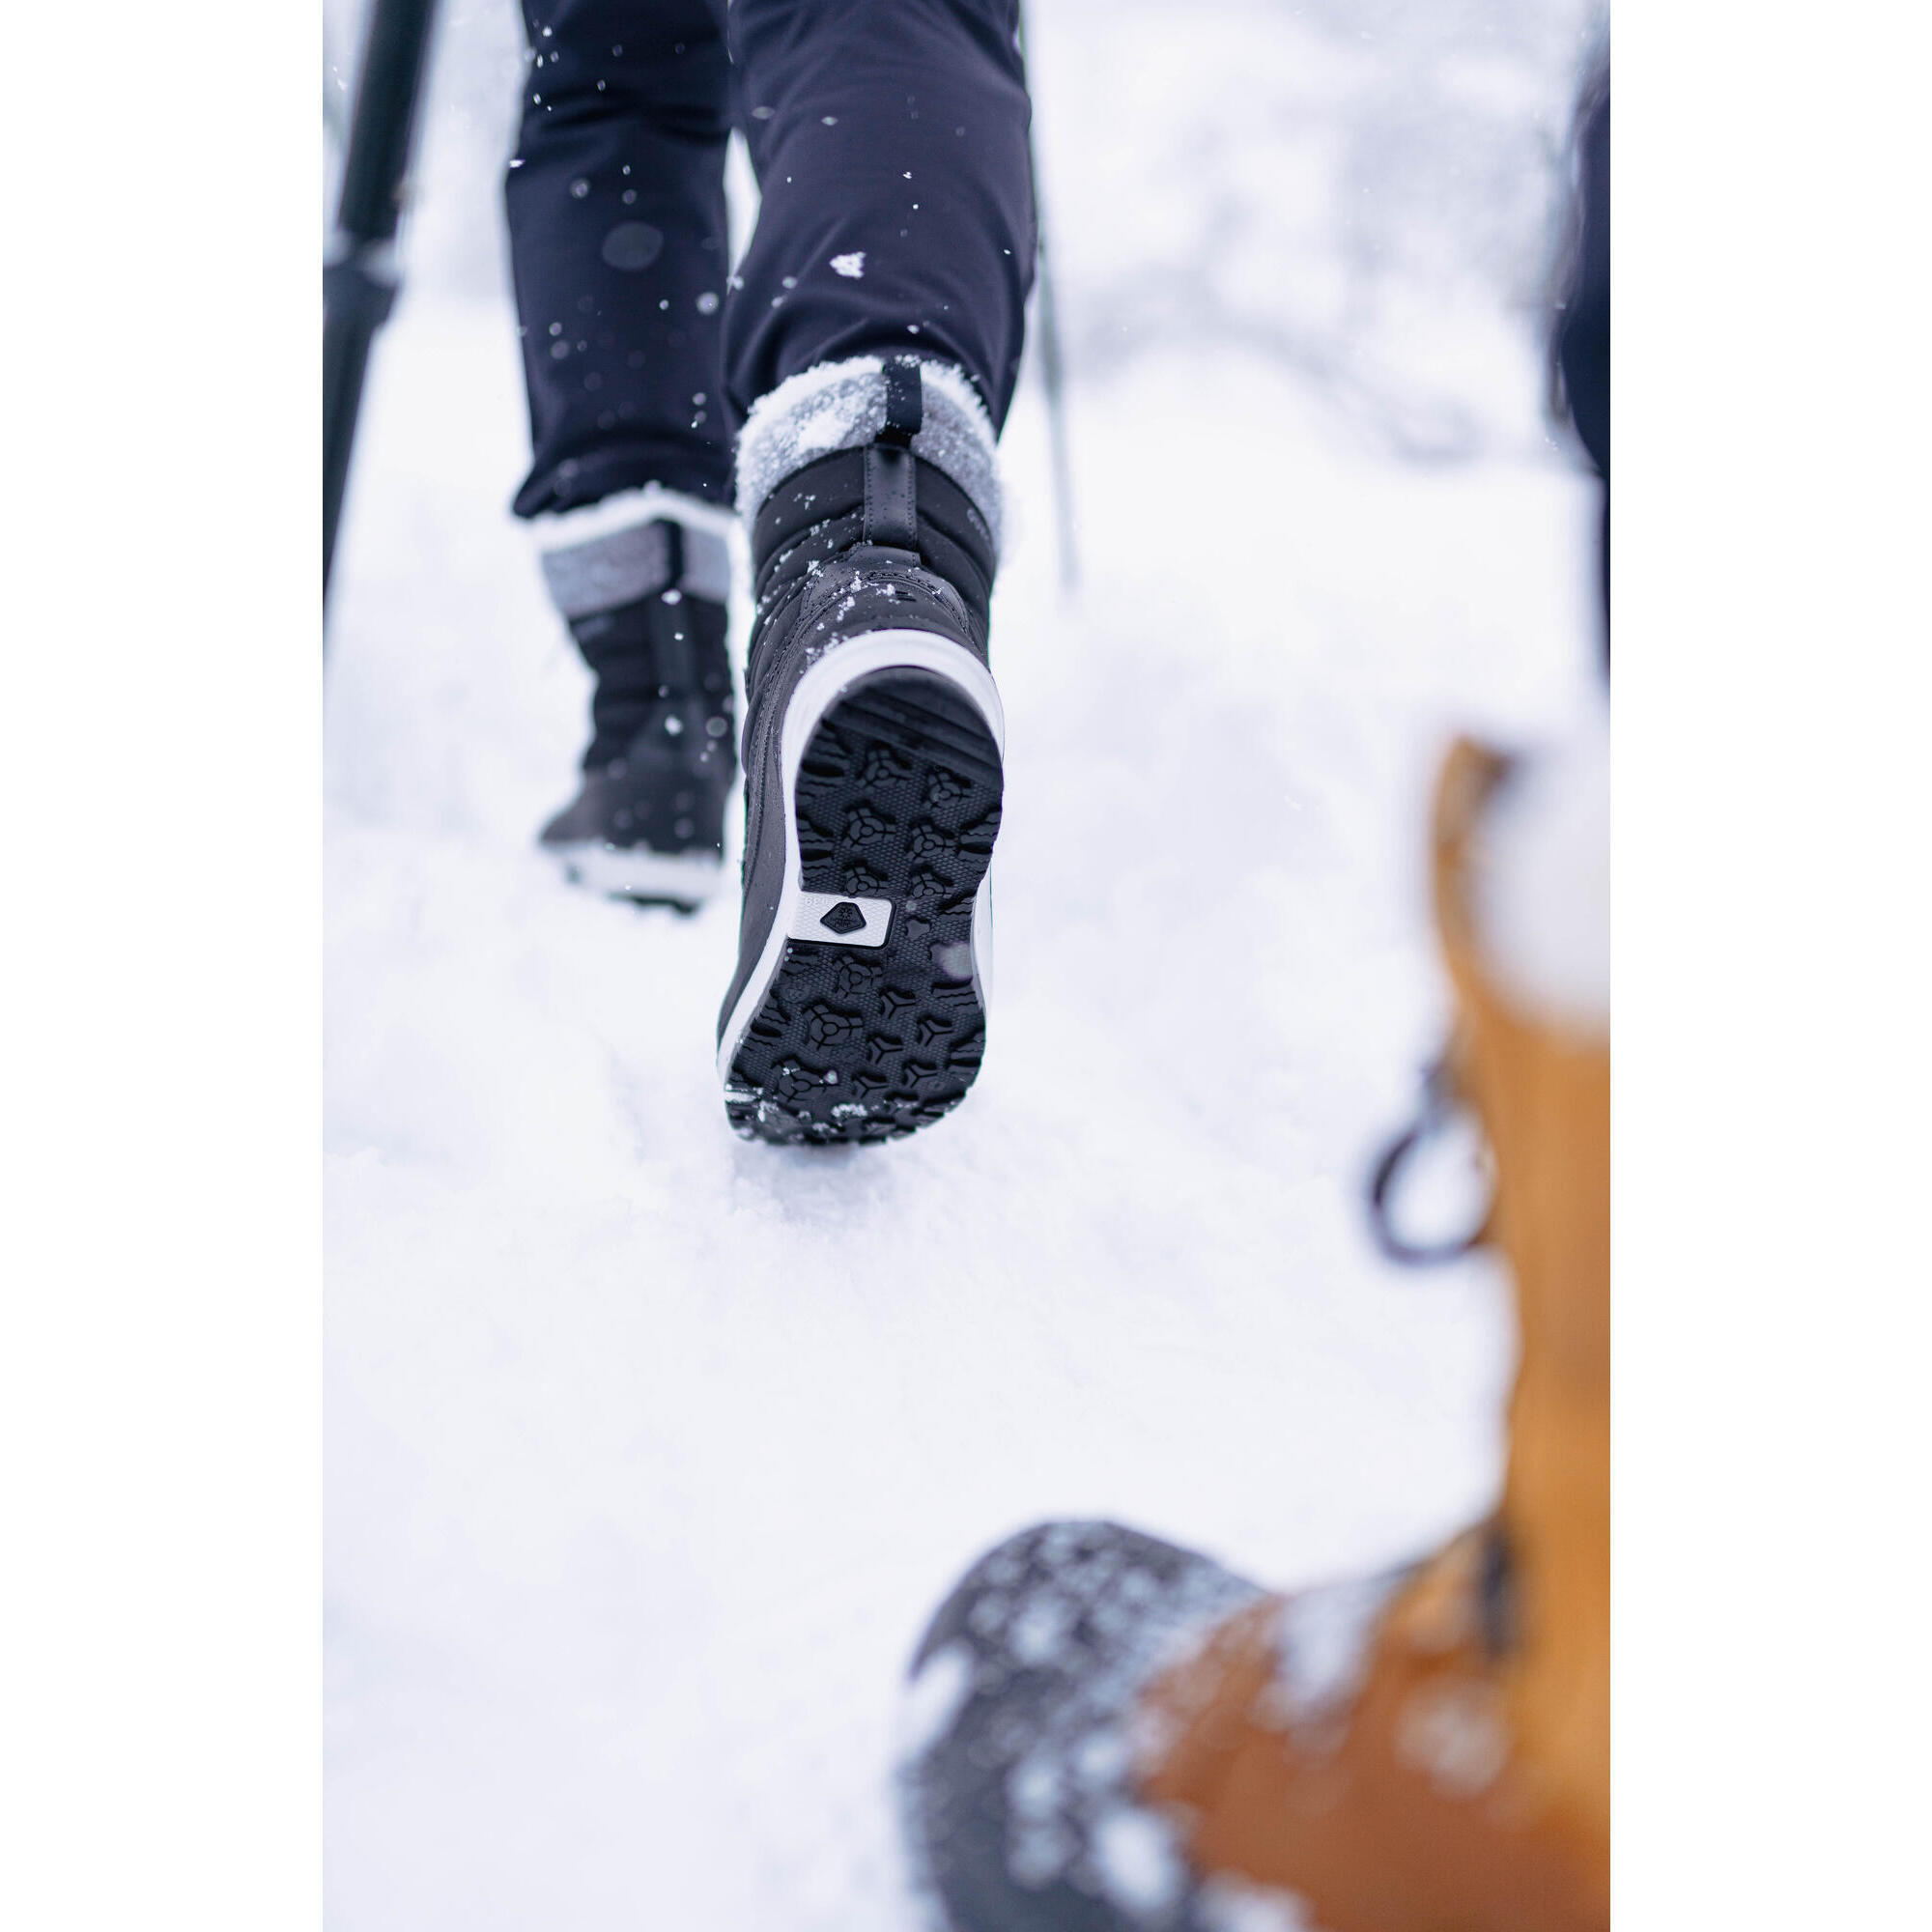 Women's waterproof warm snow boots - SH500 high boot - Decathlon